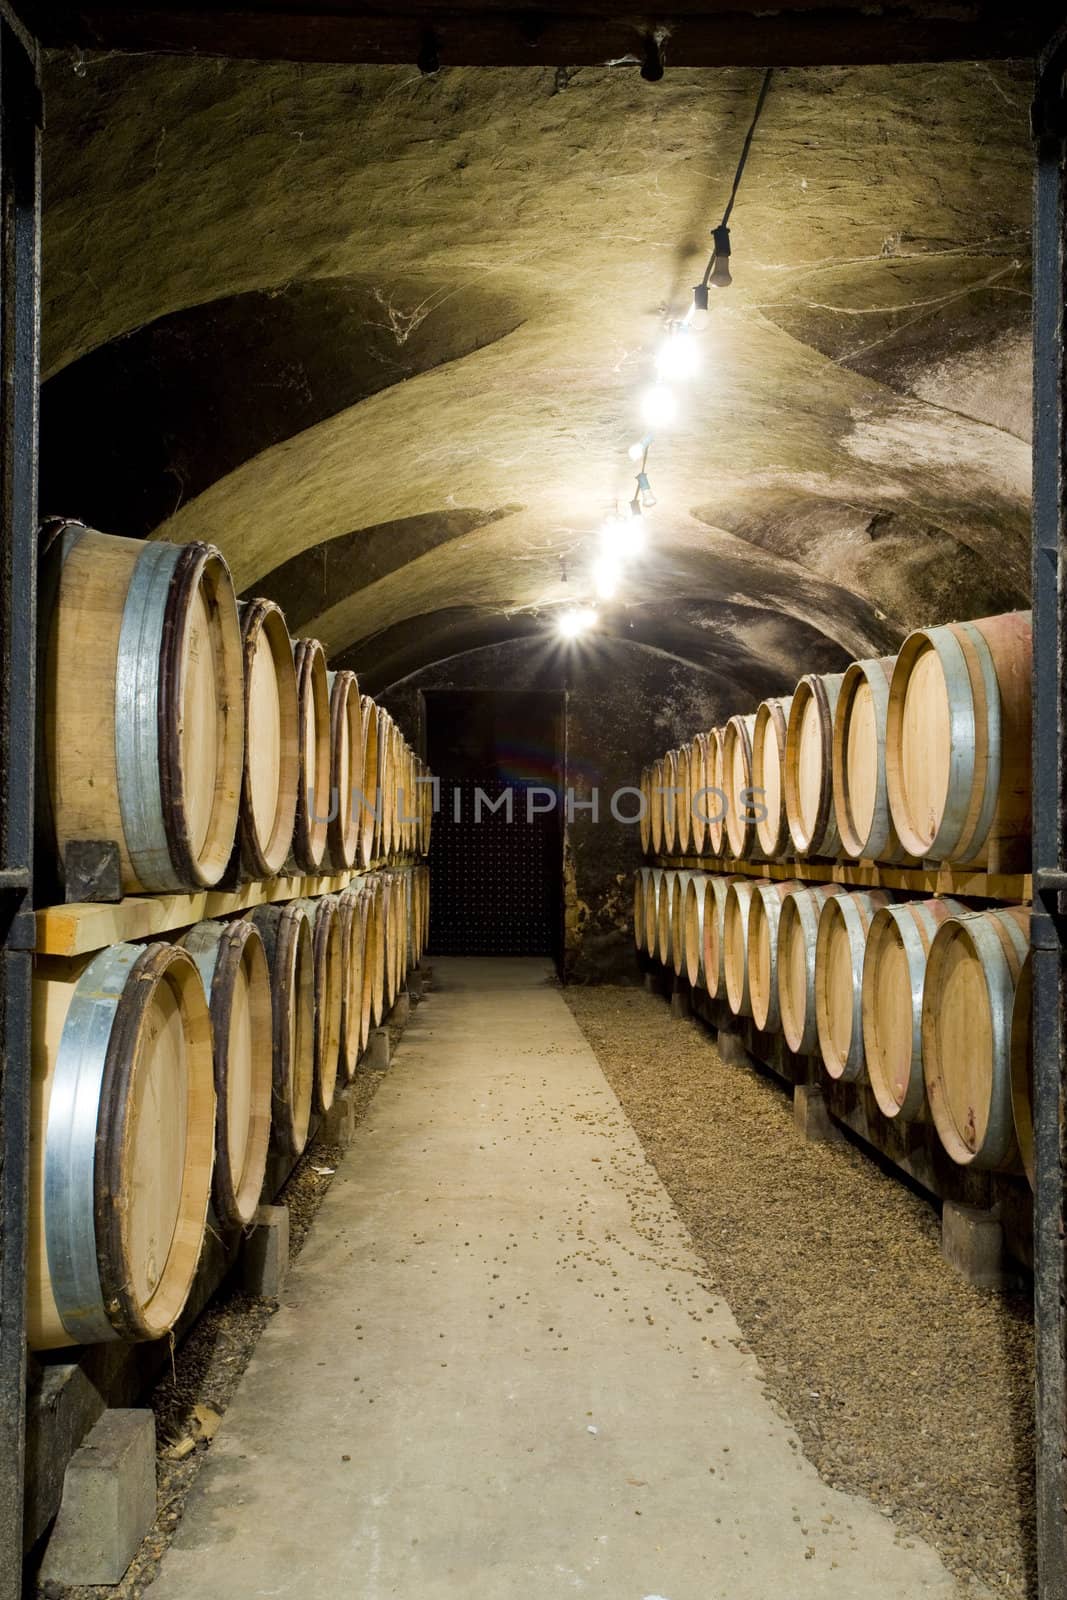 Chateau de Cary Potet (wine cellar), Buxy, Burgundy, France by phbcz